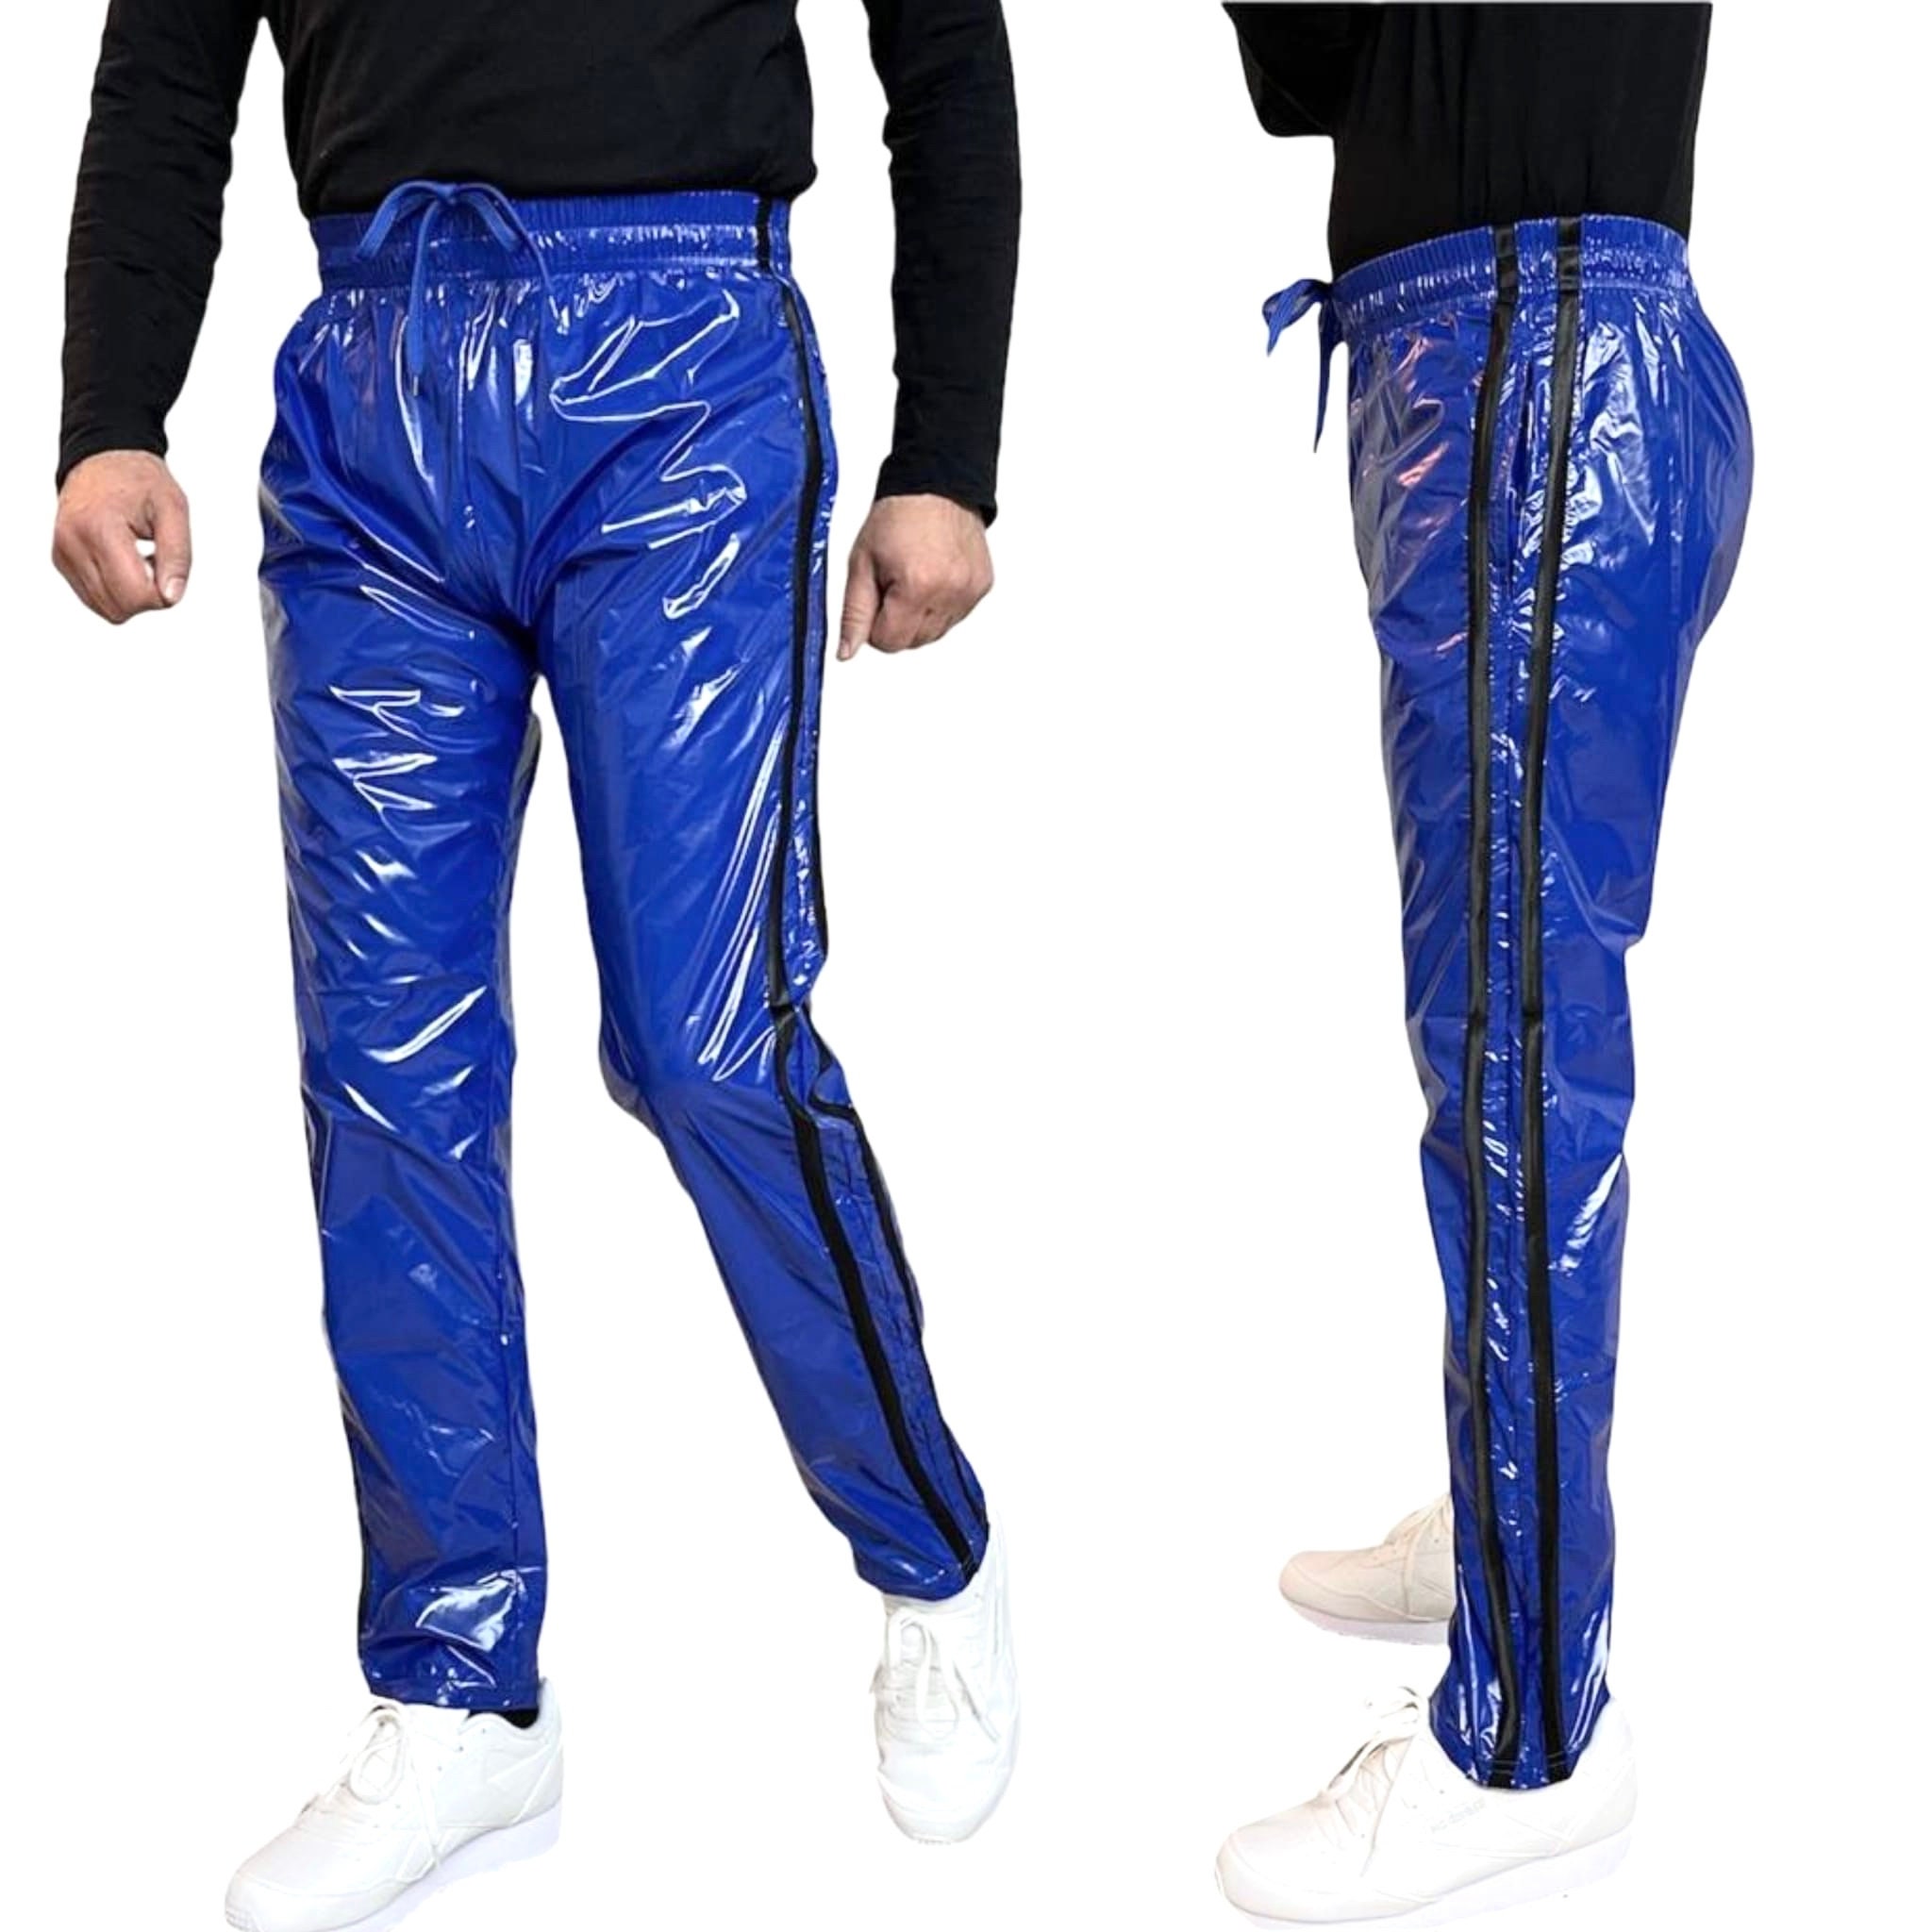 Beatrix Twin Stripe Wet Look PVC High Waist Shiny Pants 8-16